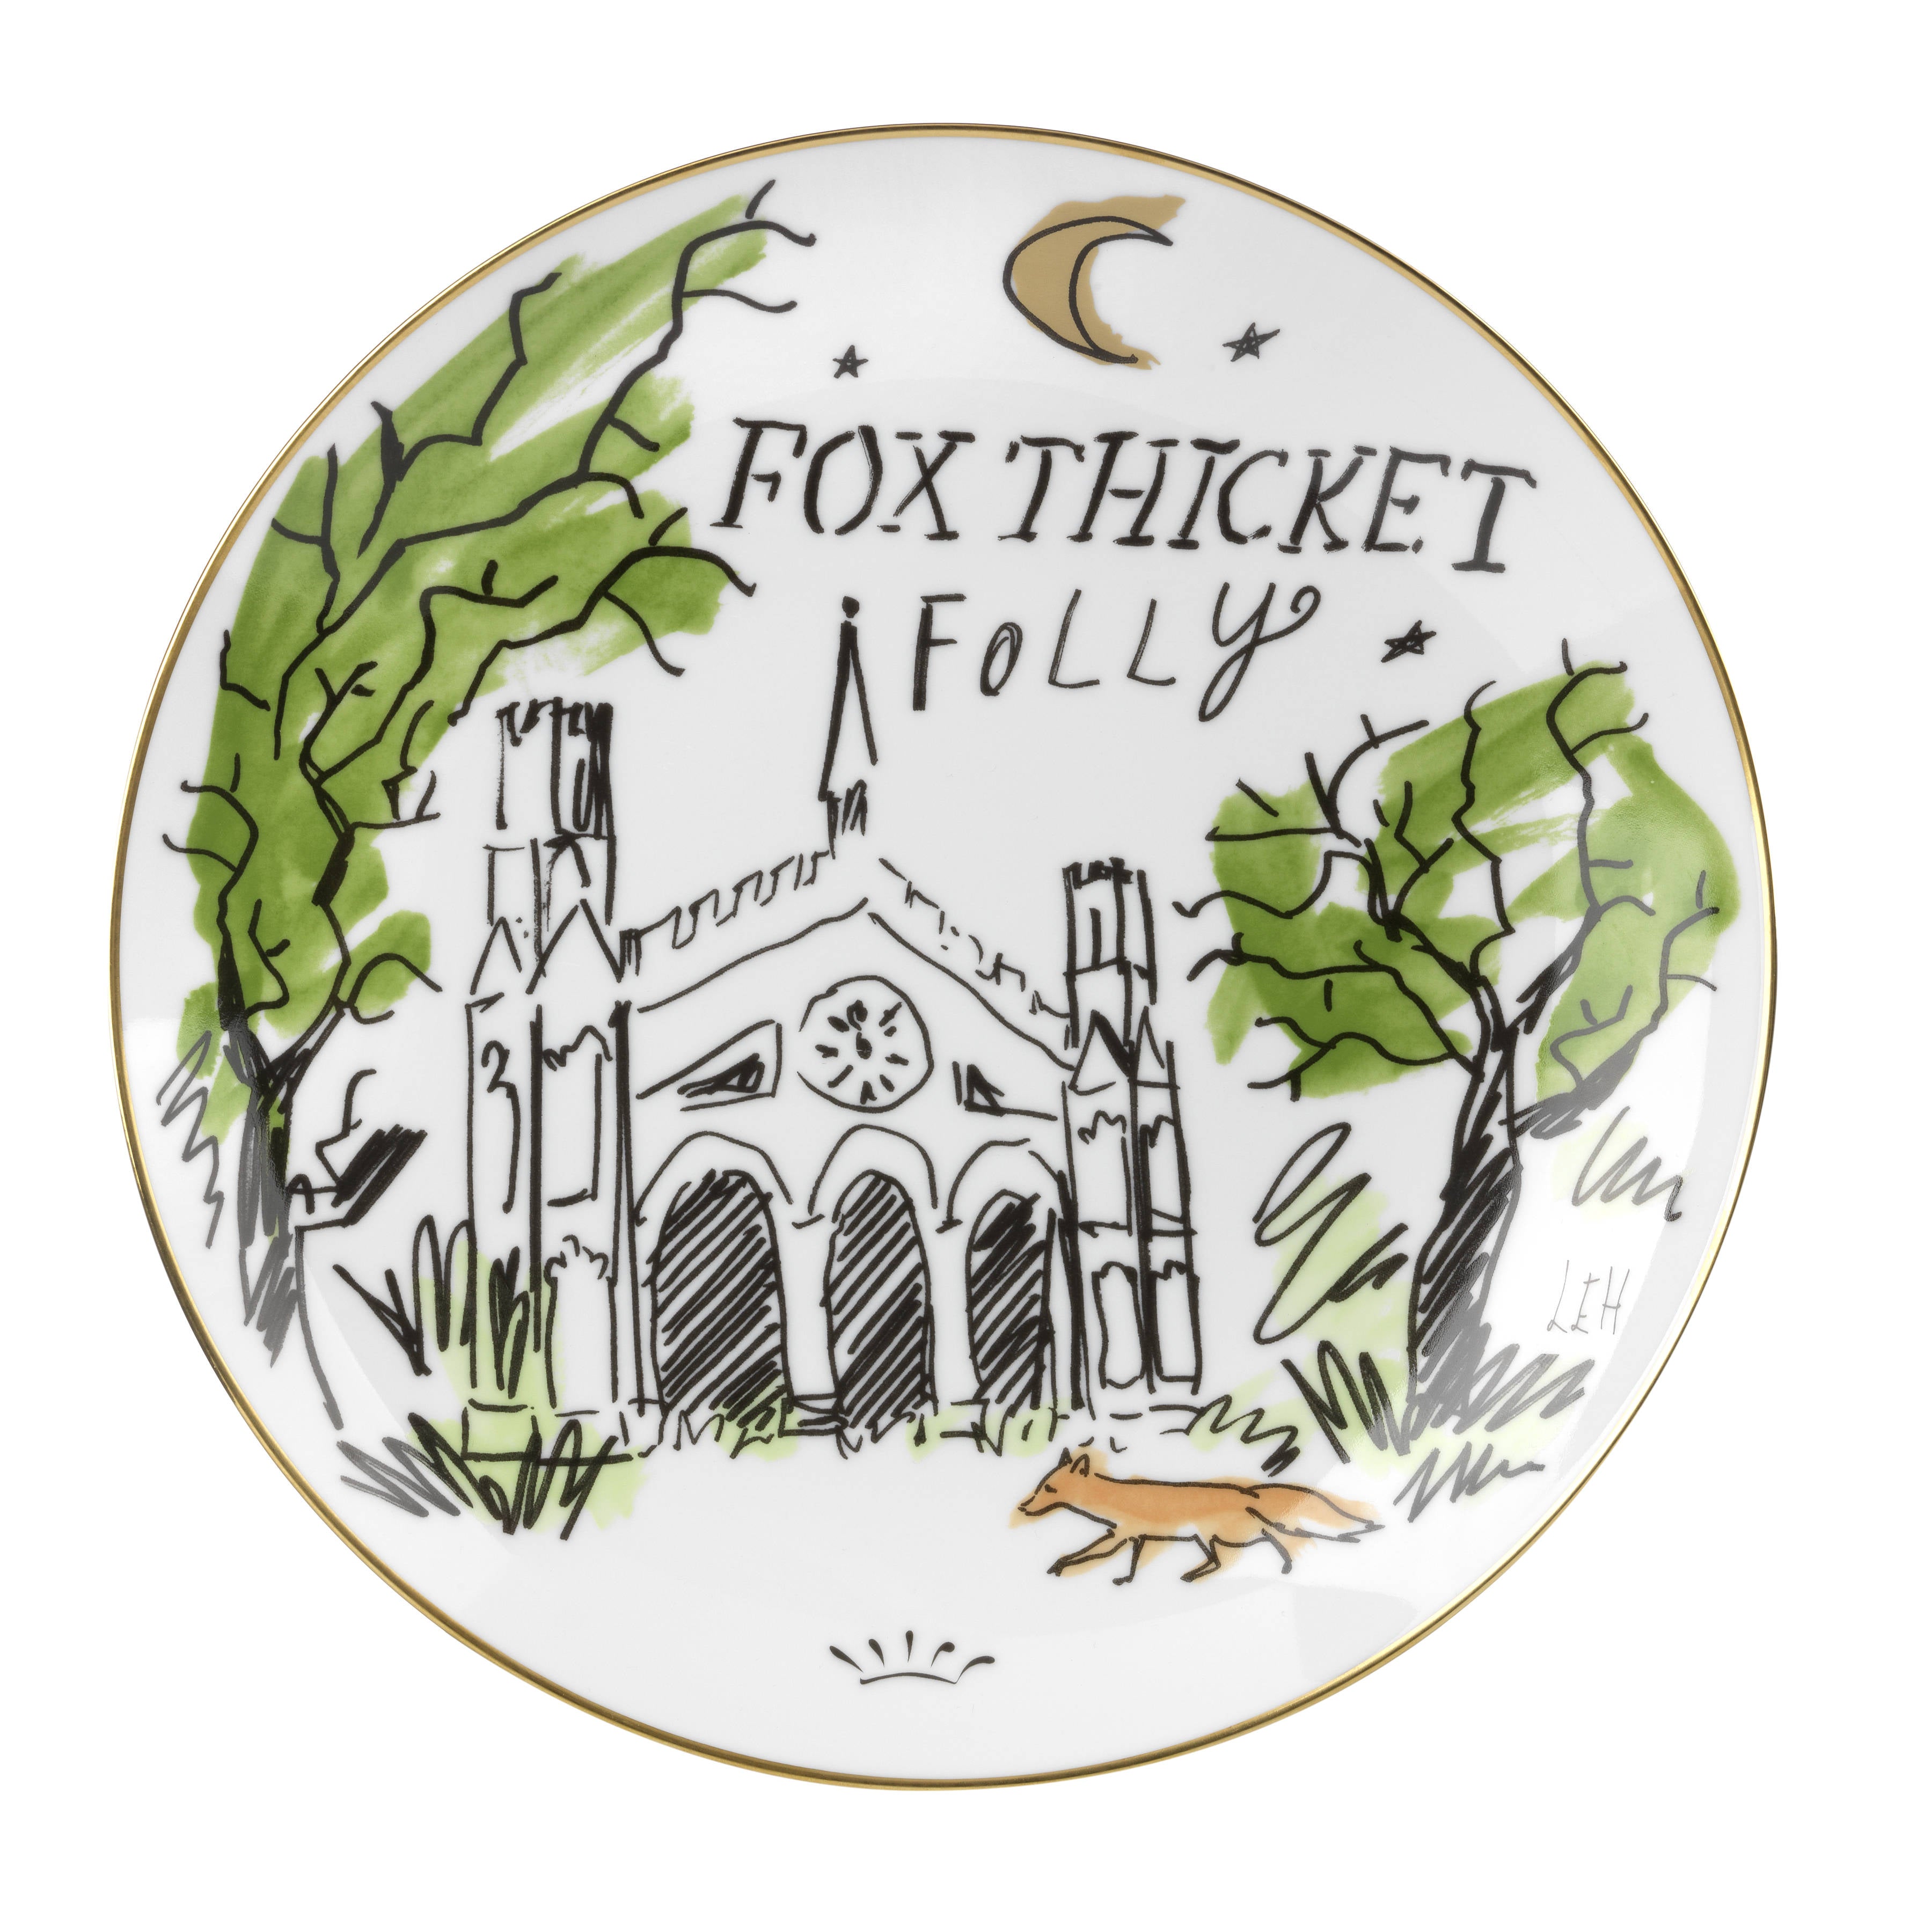 Profumi Luchino Fox Thicket Folly Plate